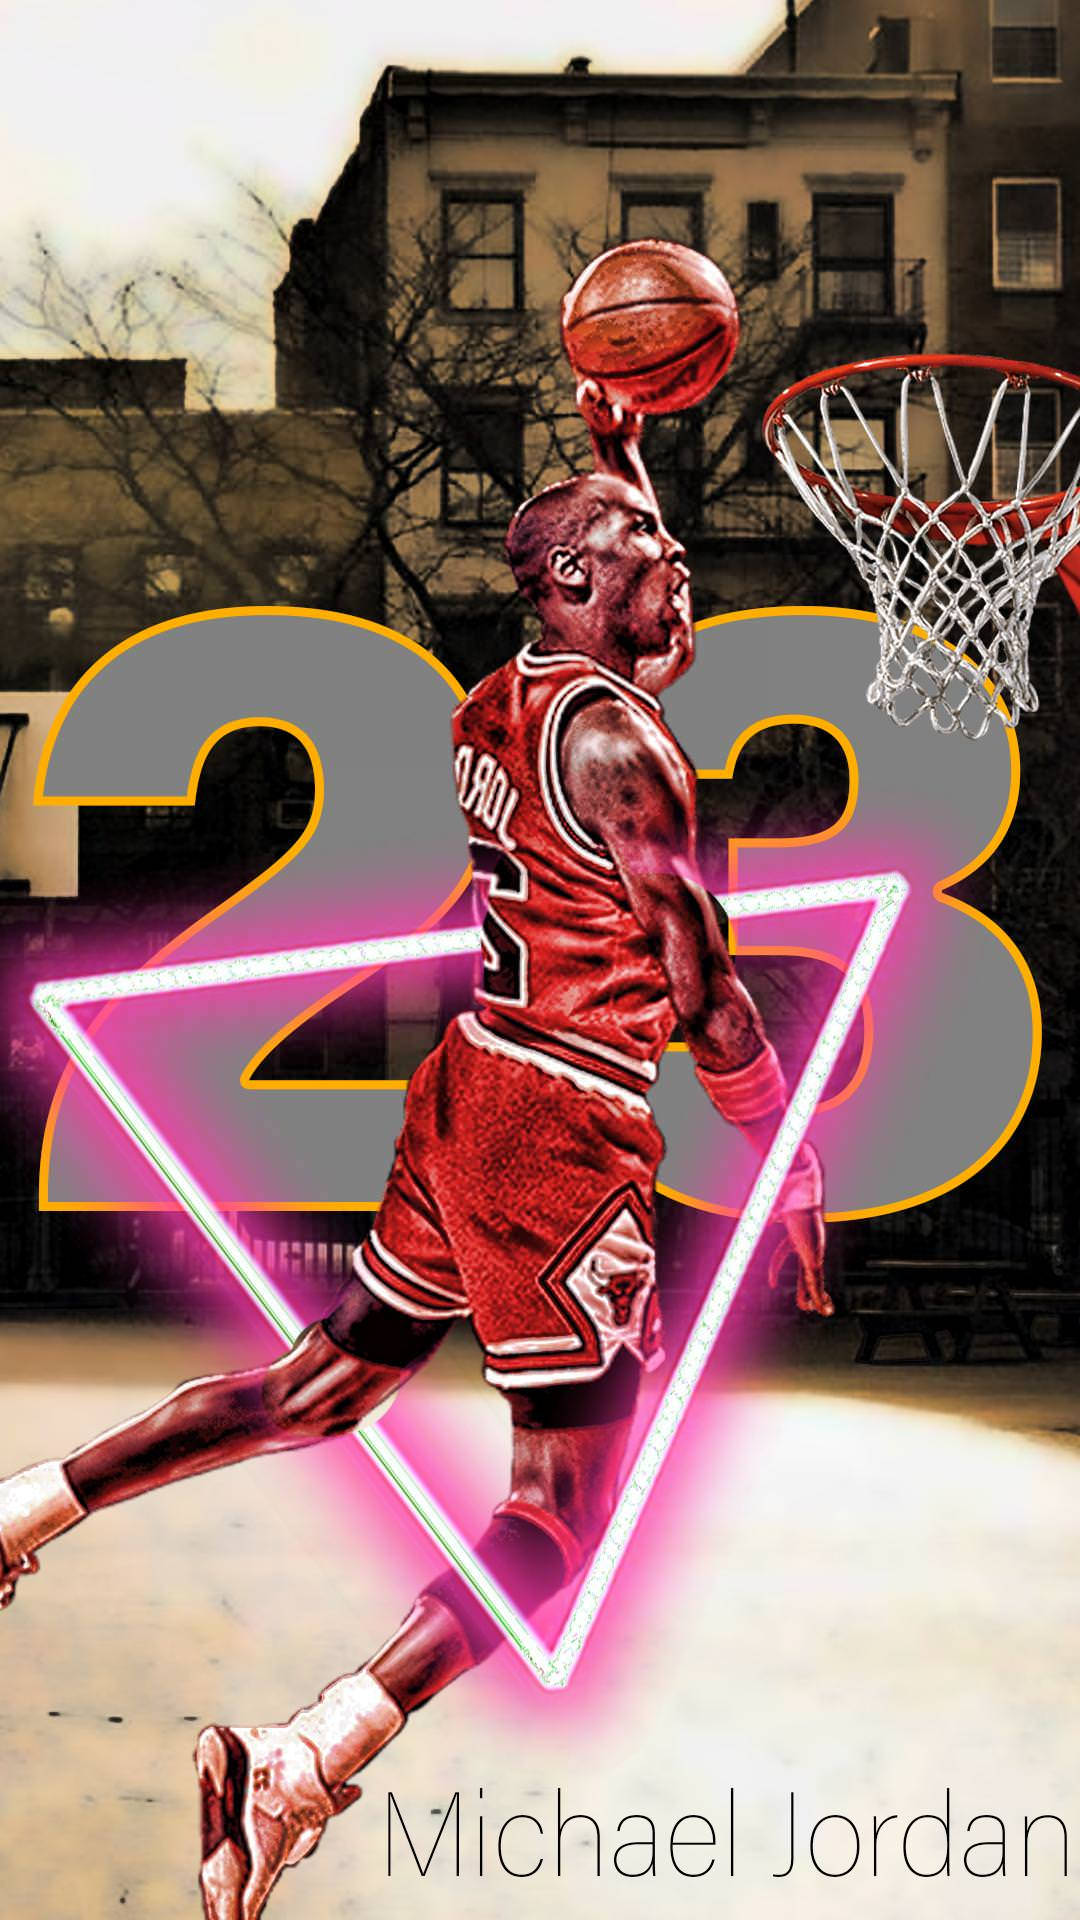 Michael Jordan 23 Cool Basketball Iphone Picture